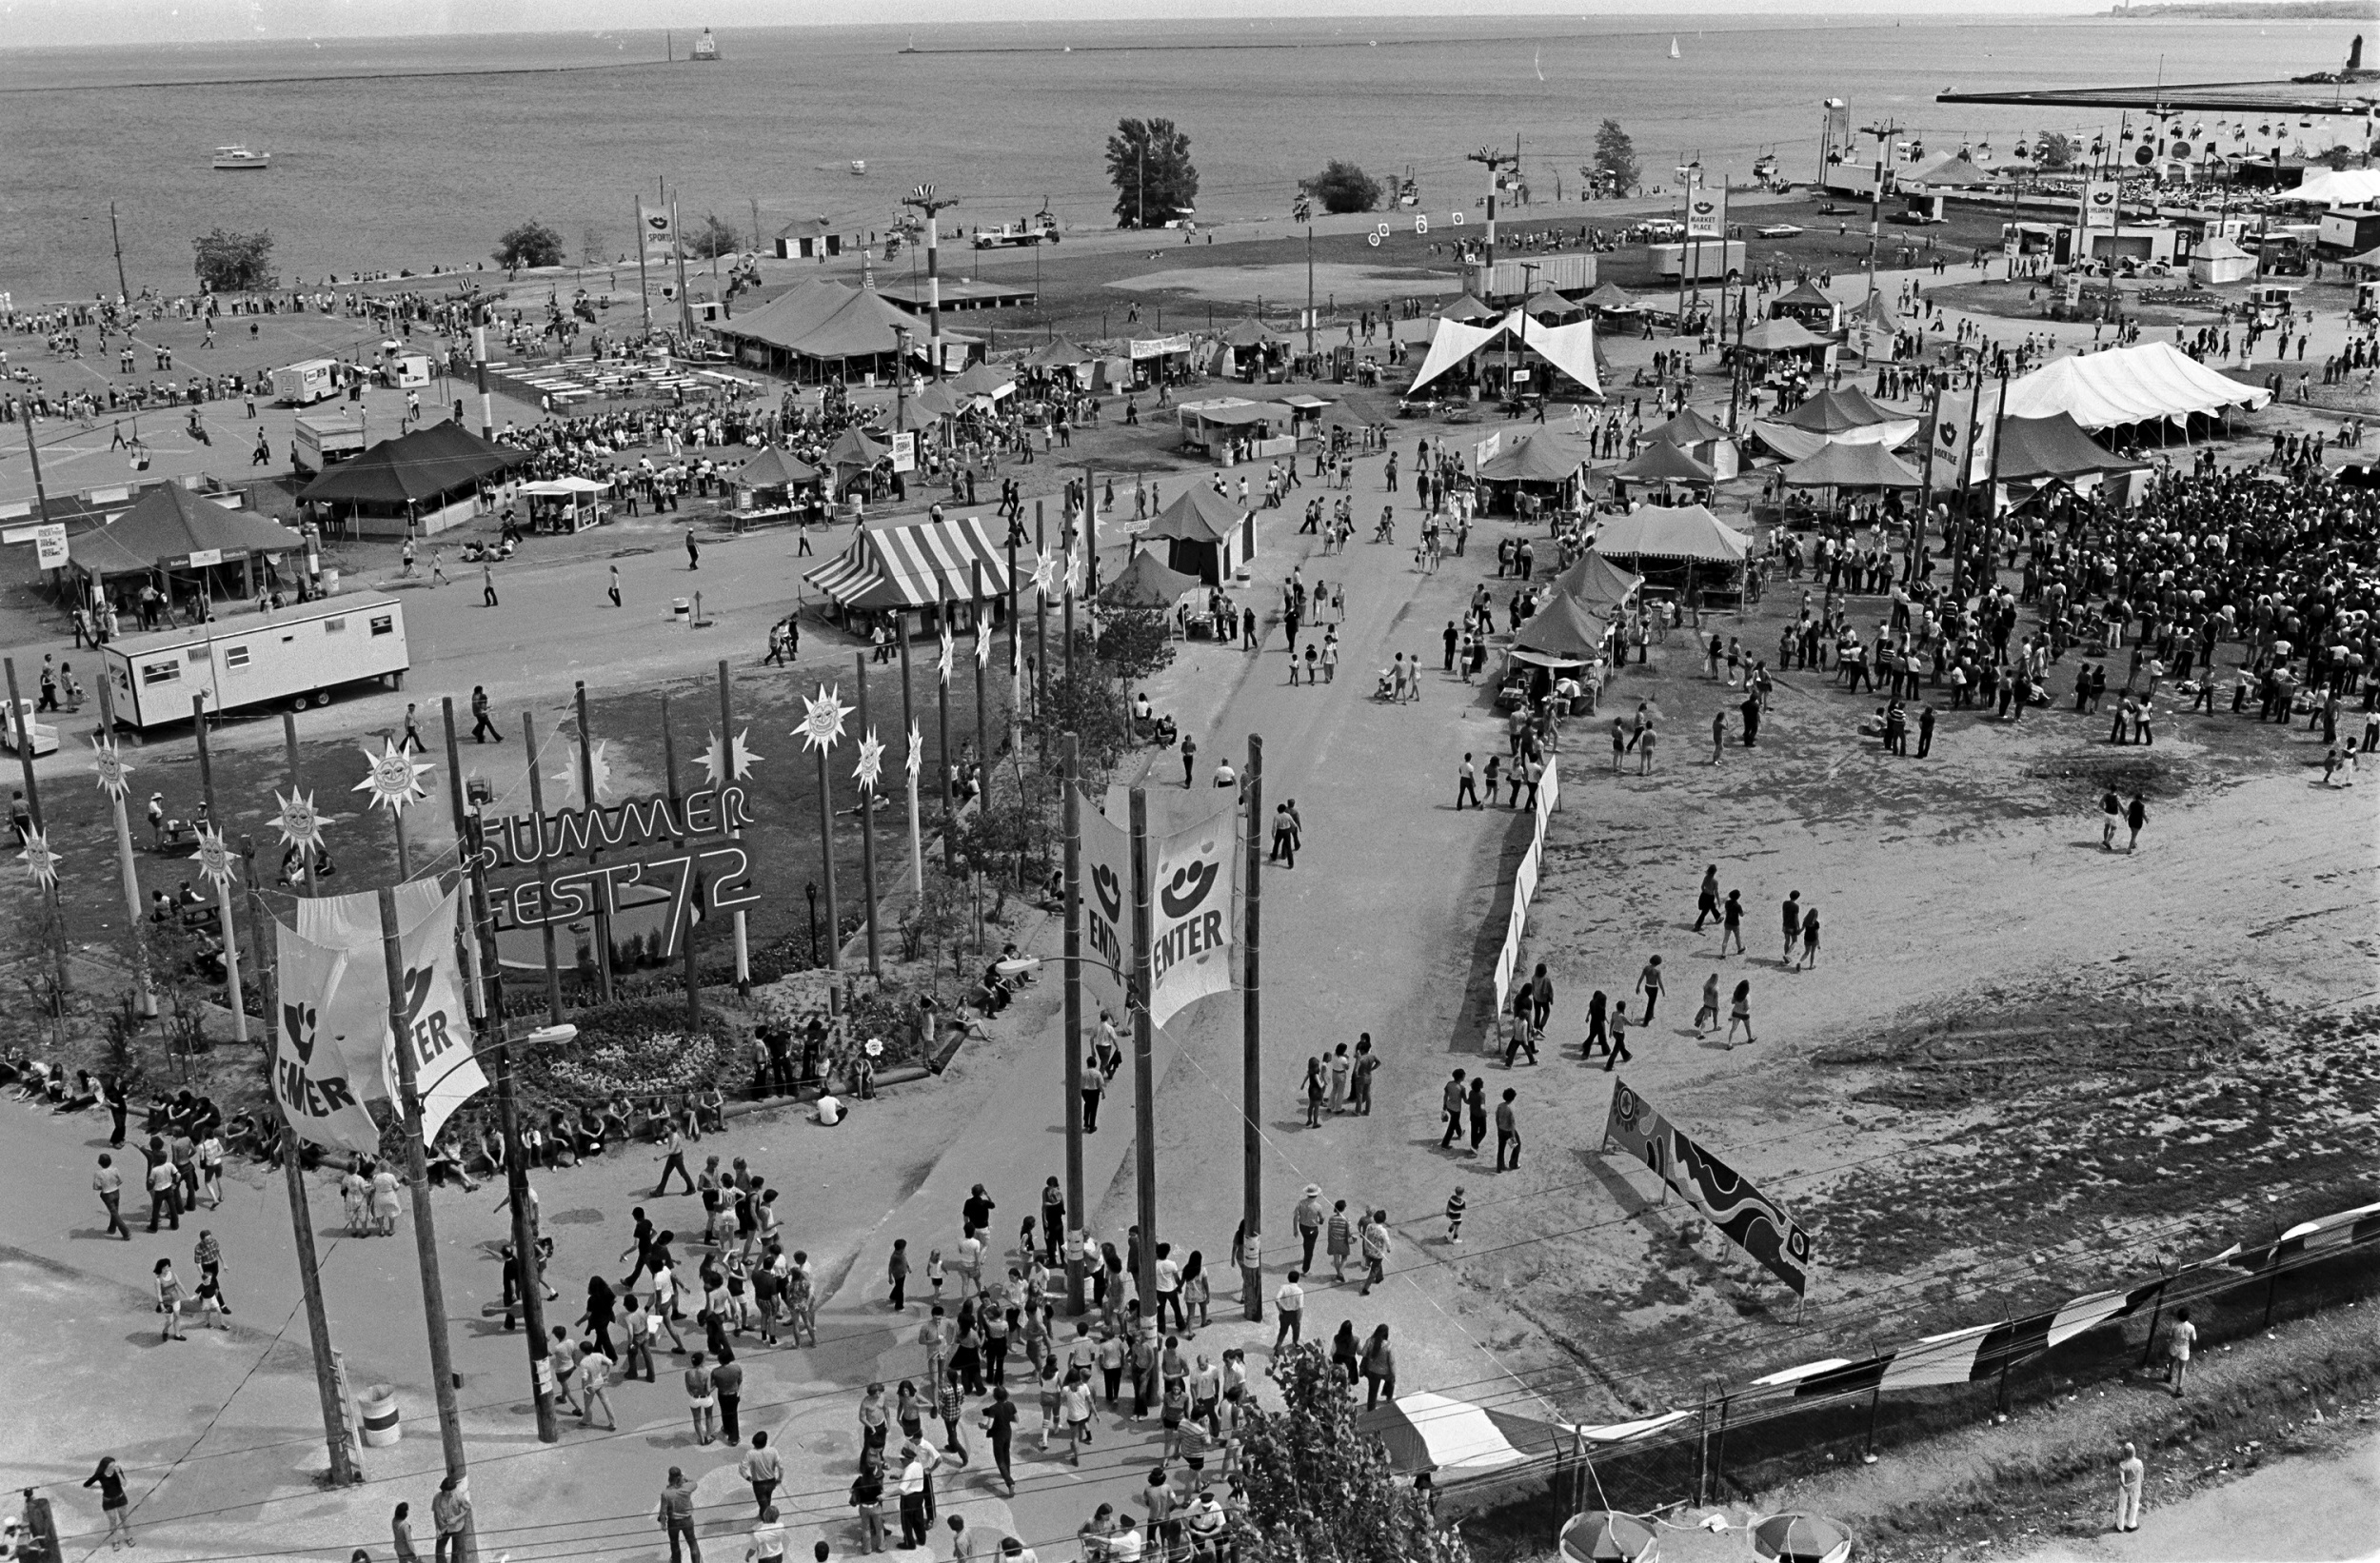 Summerfest Grounds in 1972